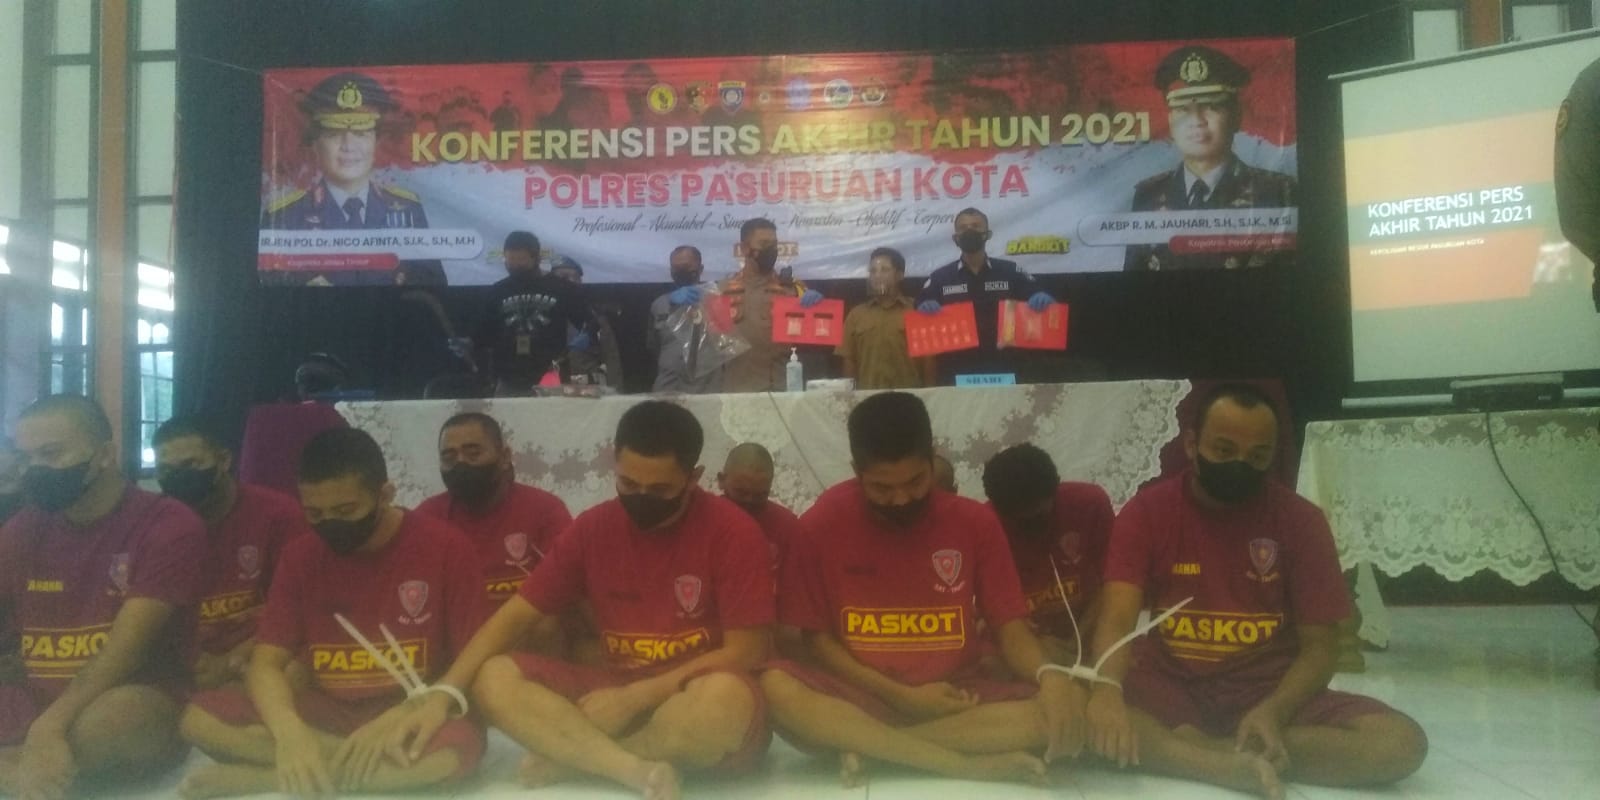 Kapolres Pasuruan Kota, AKBP Raden Muhammad Jauhari (tengah), menunjukkan barang bukti narkotika yang diamankan pada tahun 2021